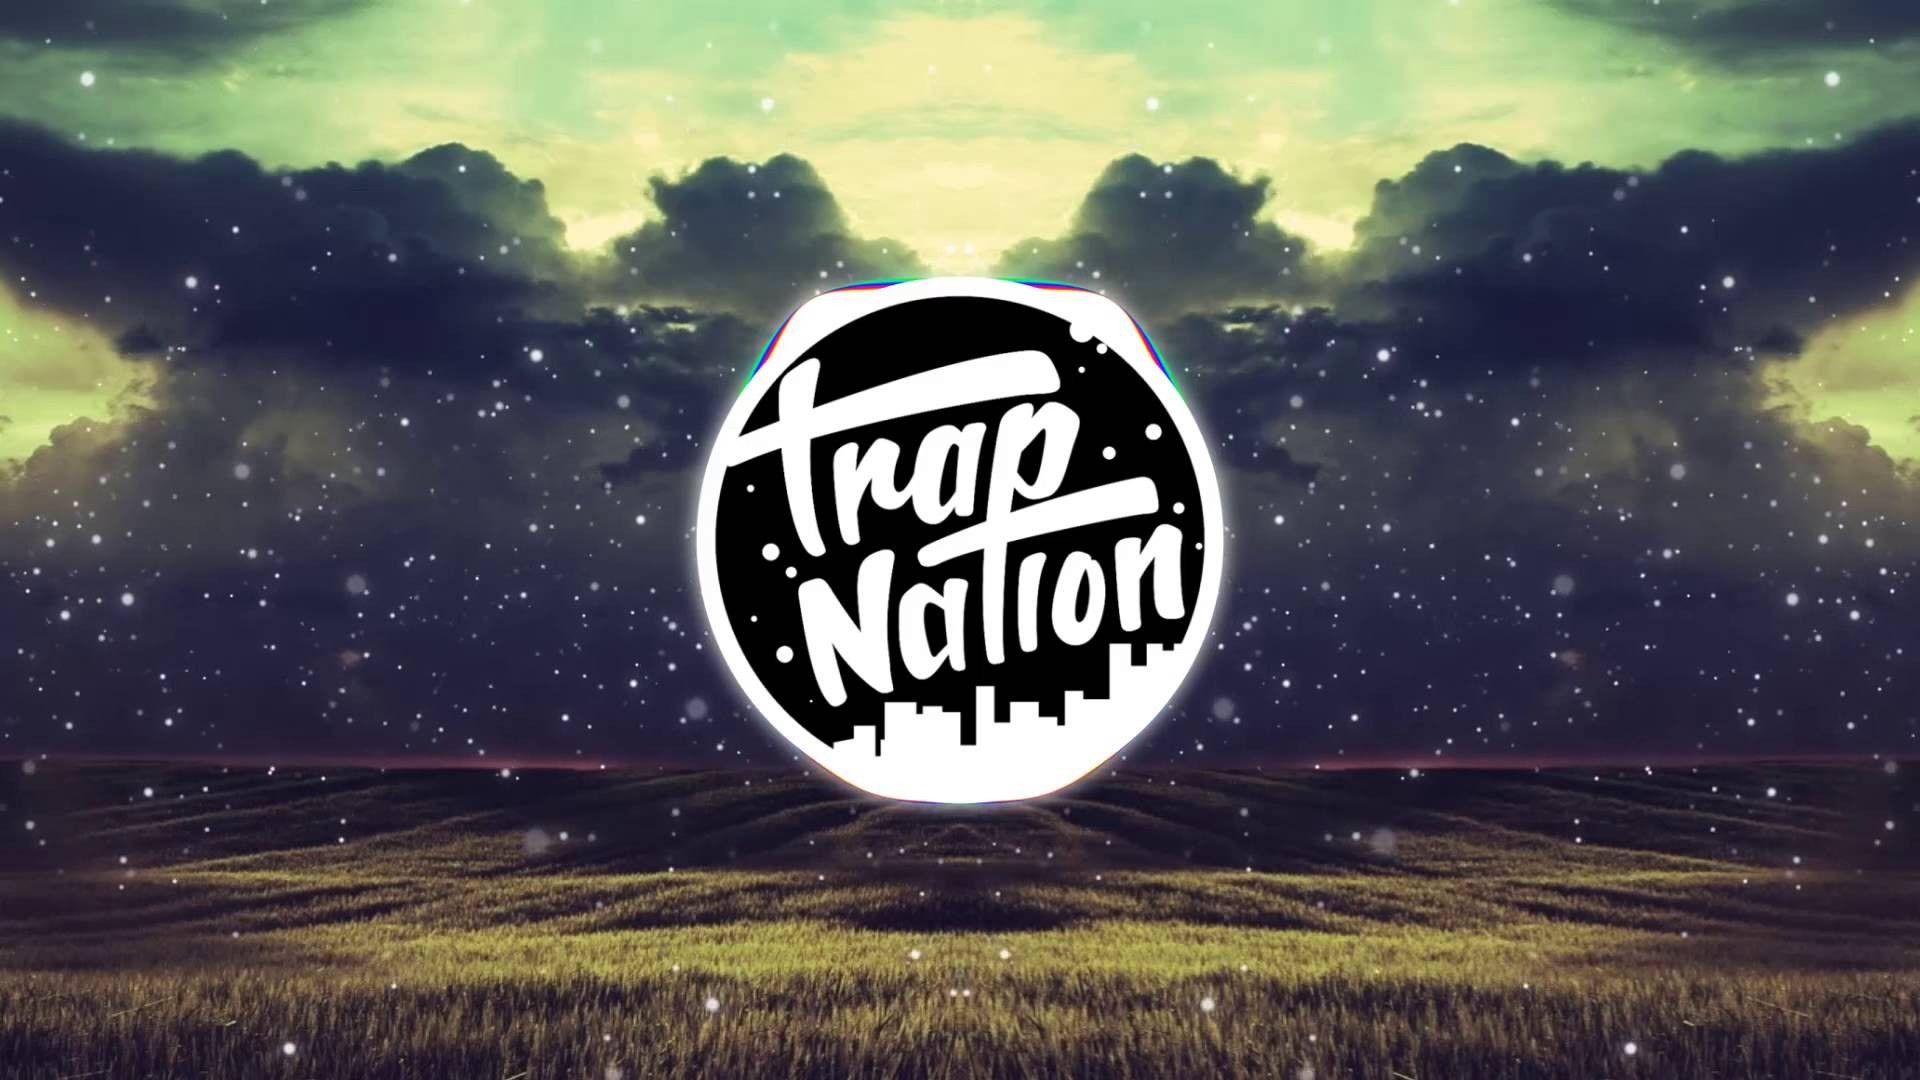 1920x1080 logo Trap Nation Trap Music dab prince screenshot computer wallpaper font  album cover